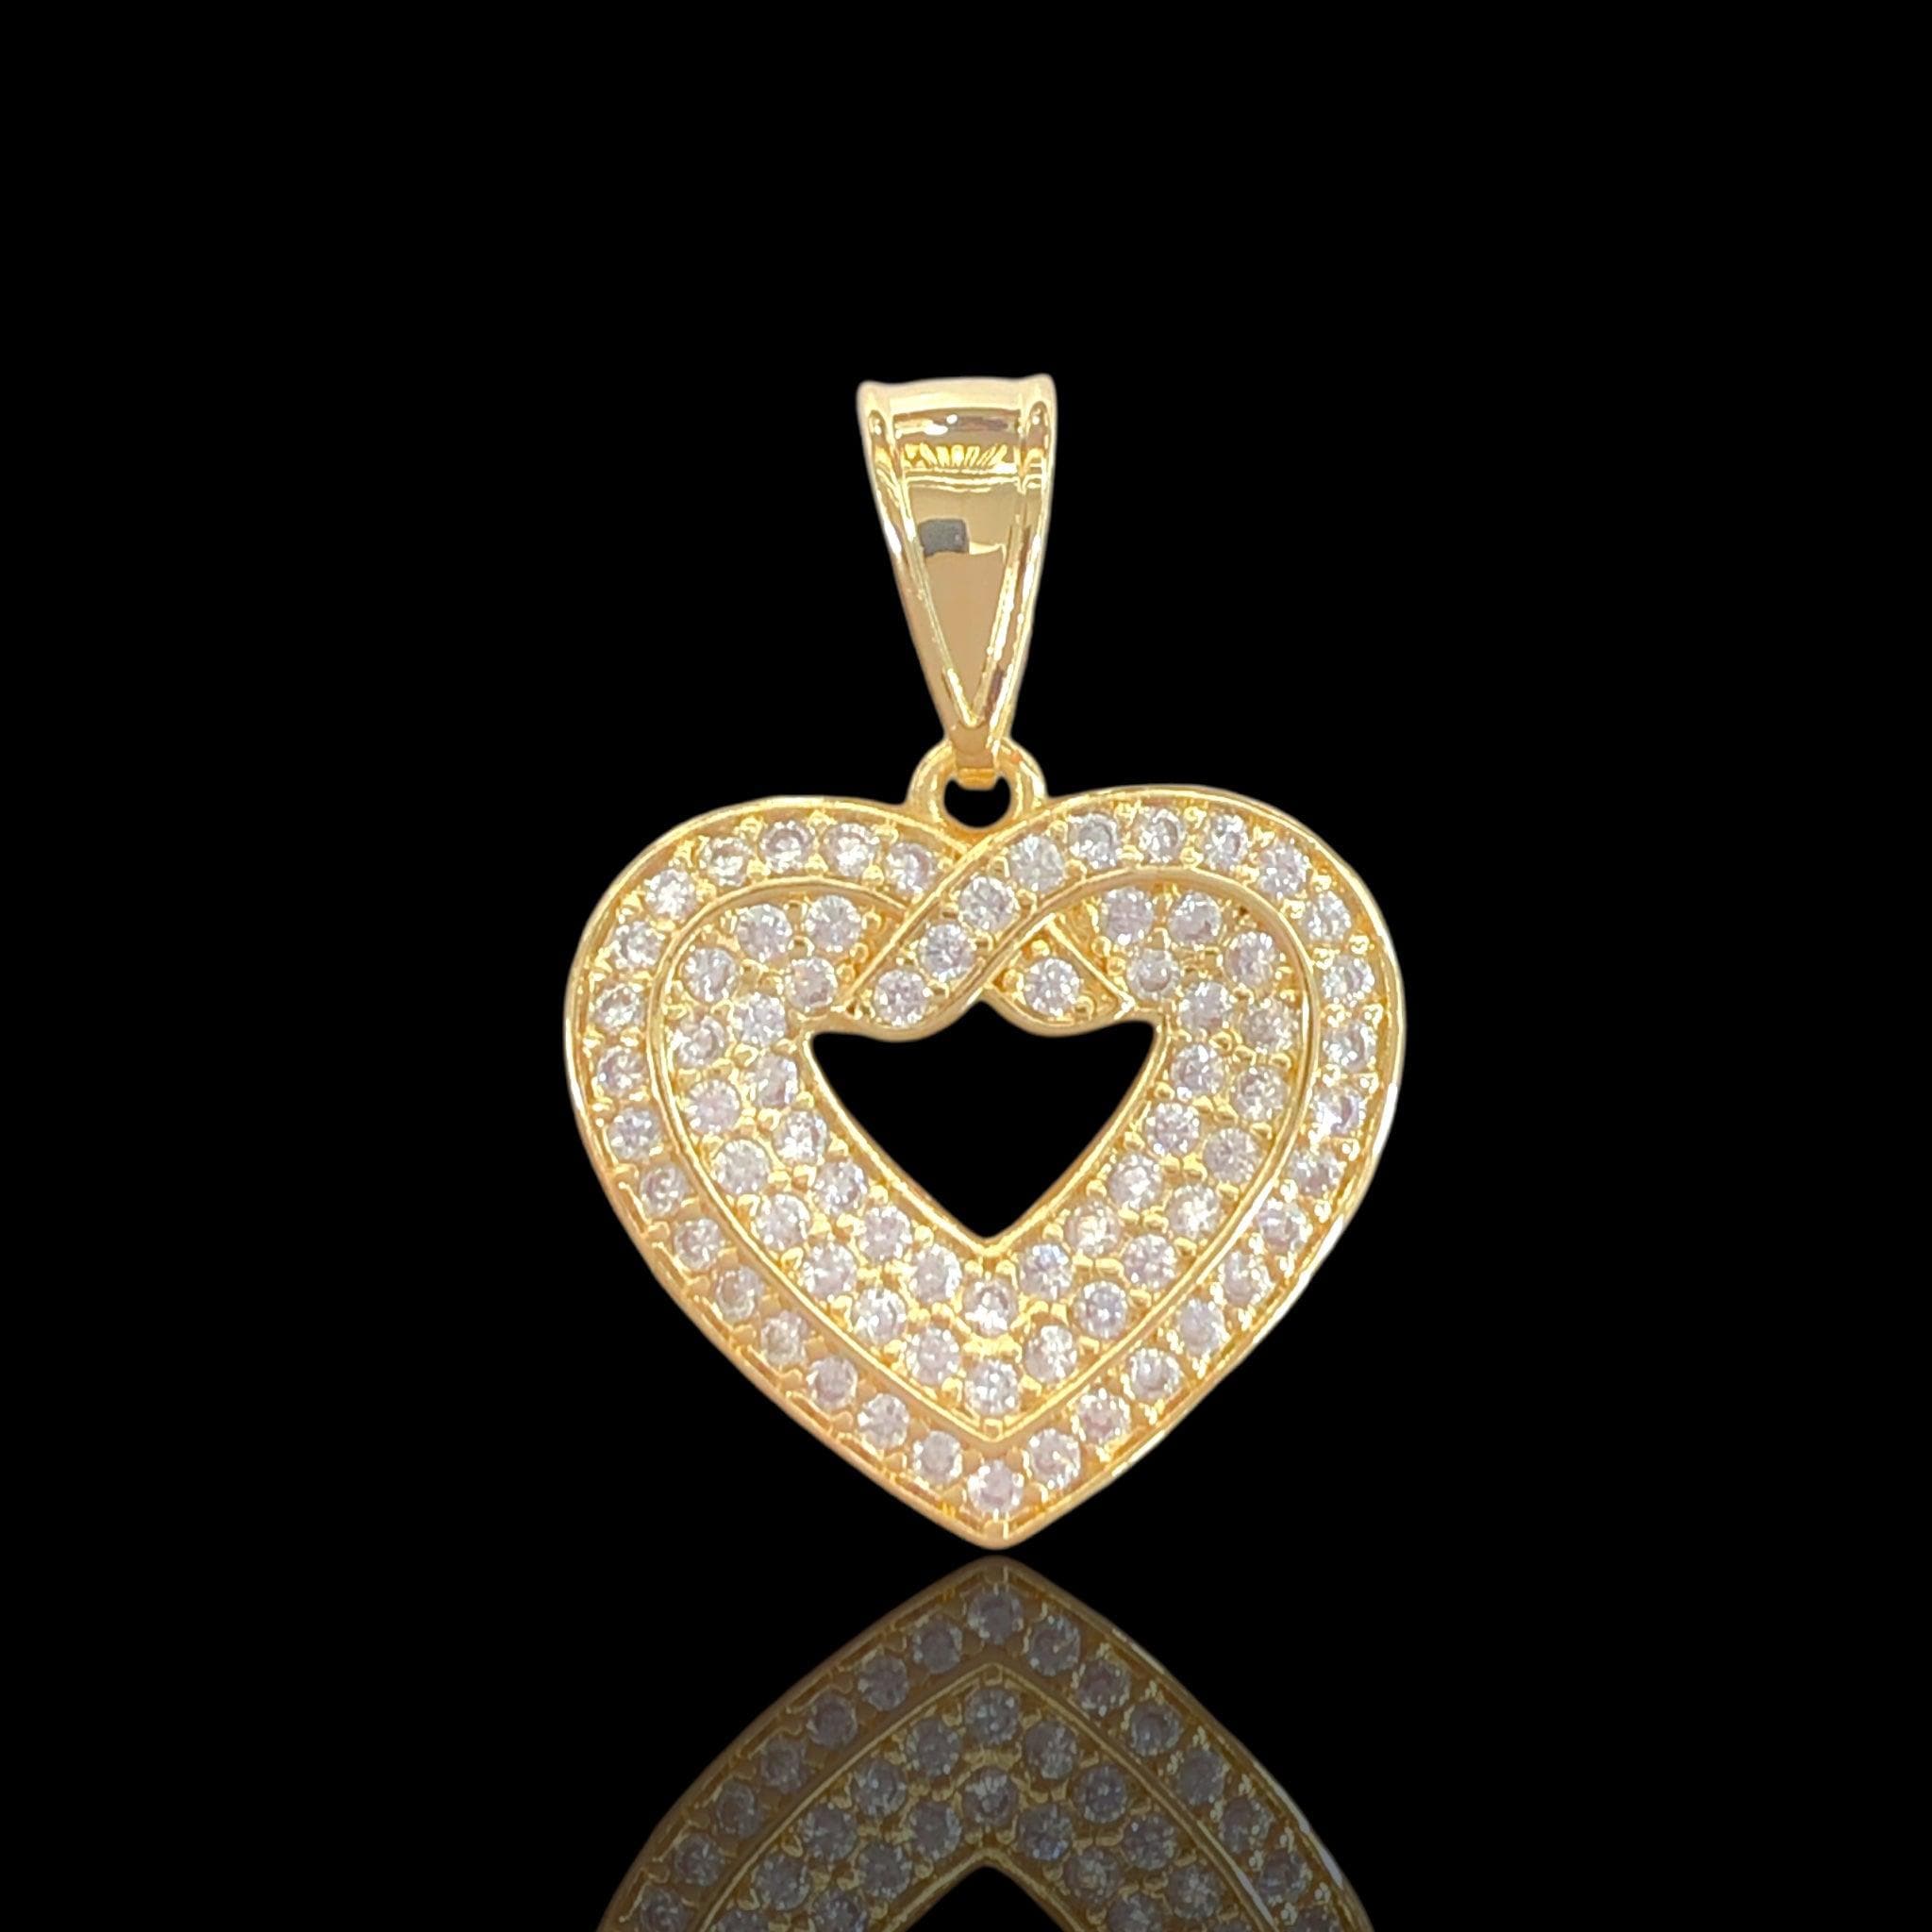 OLP 0499 18K Gold Filled Amelia Filigree Heart Pendant -kuania oro laminado